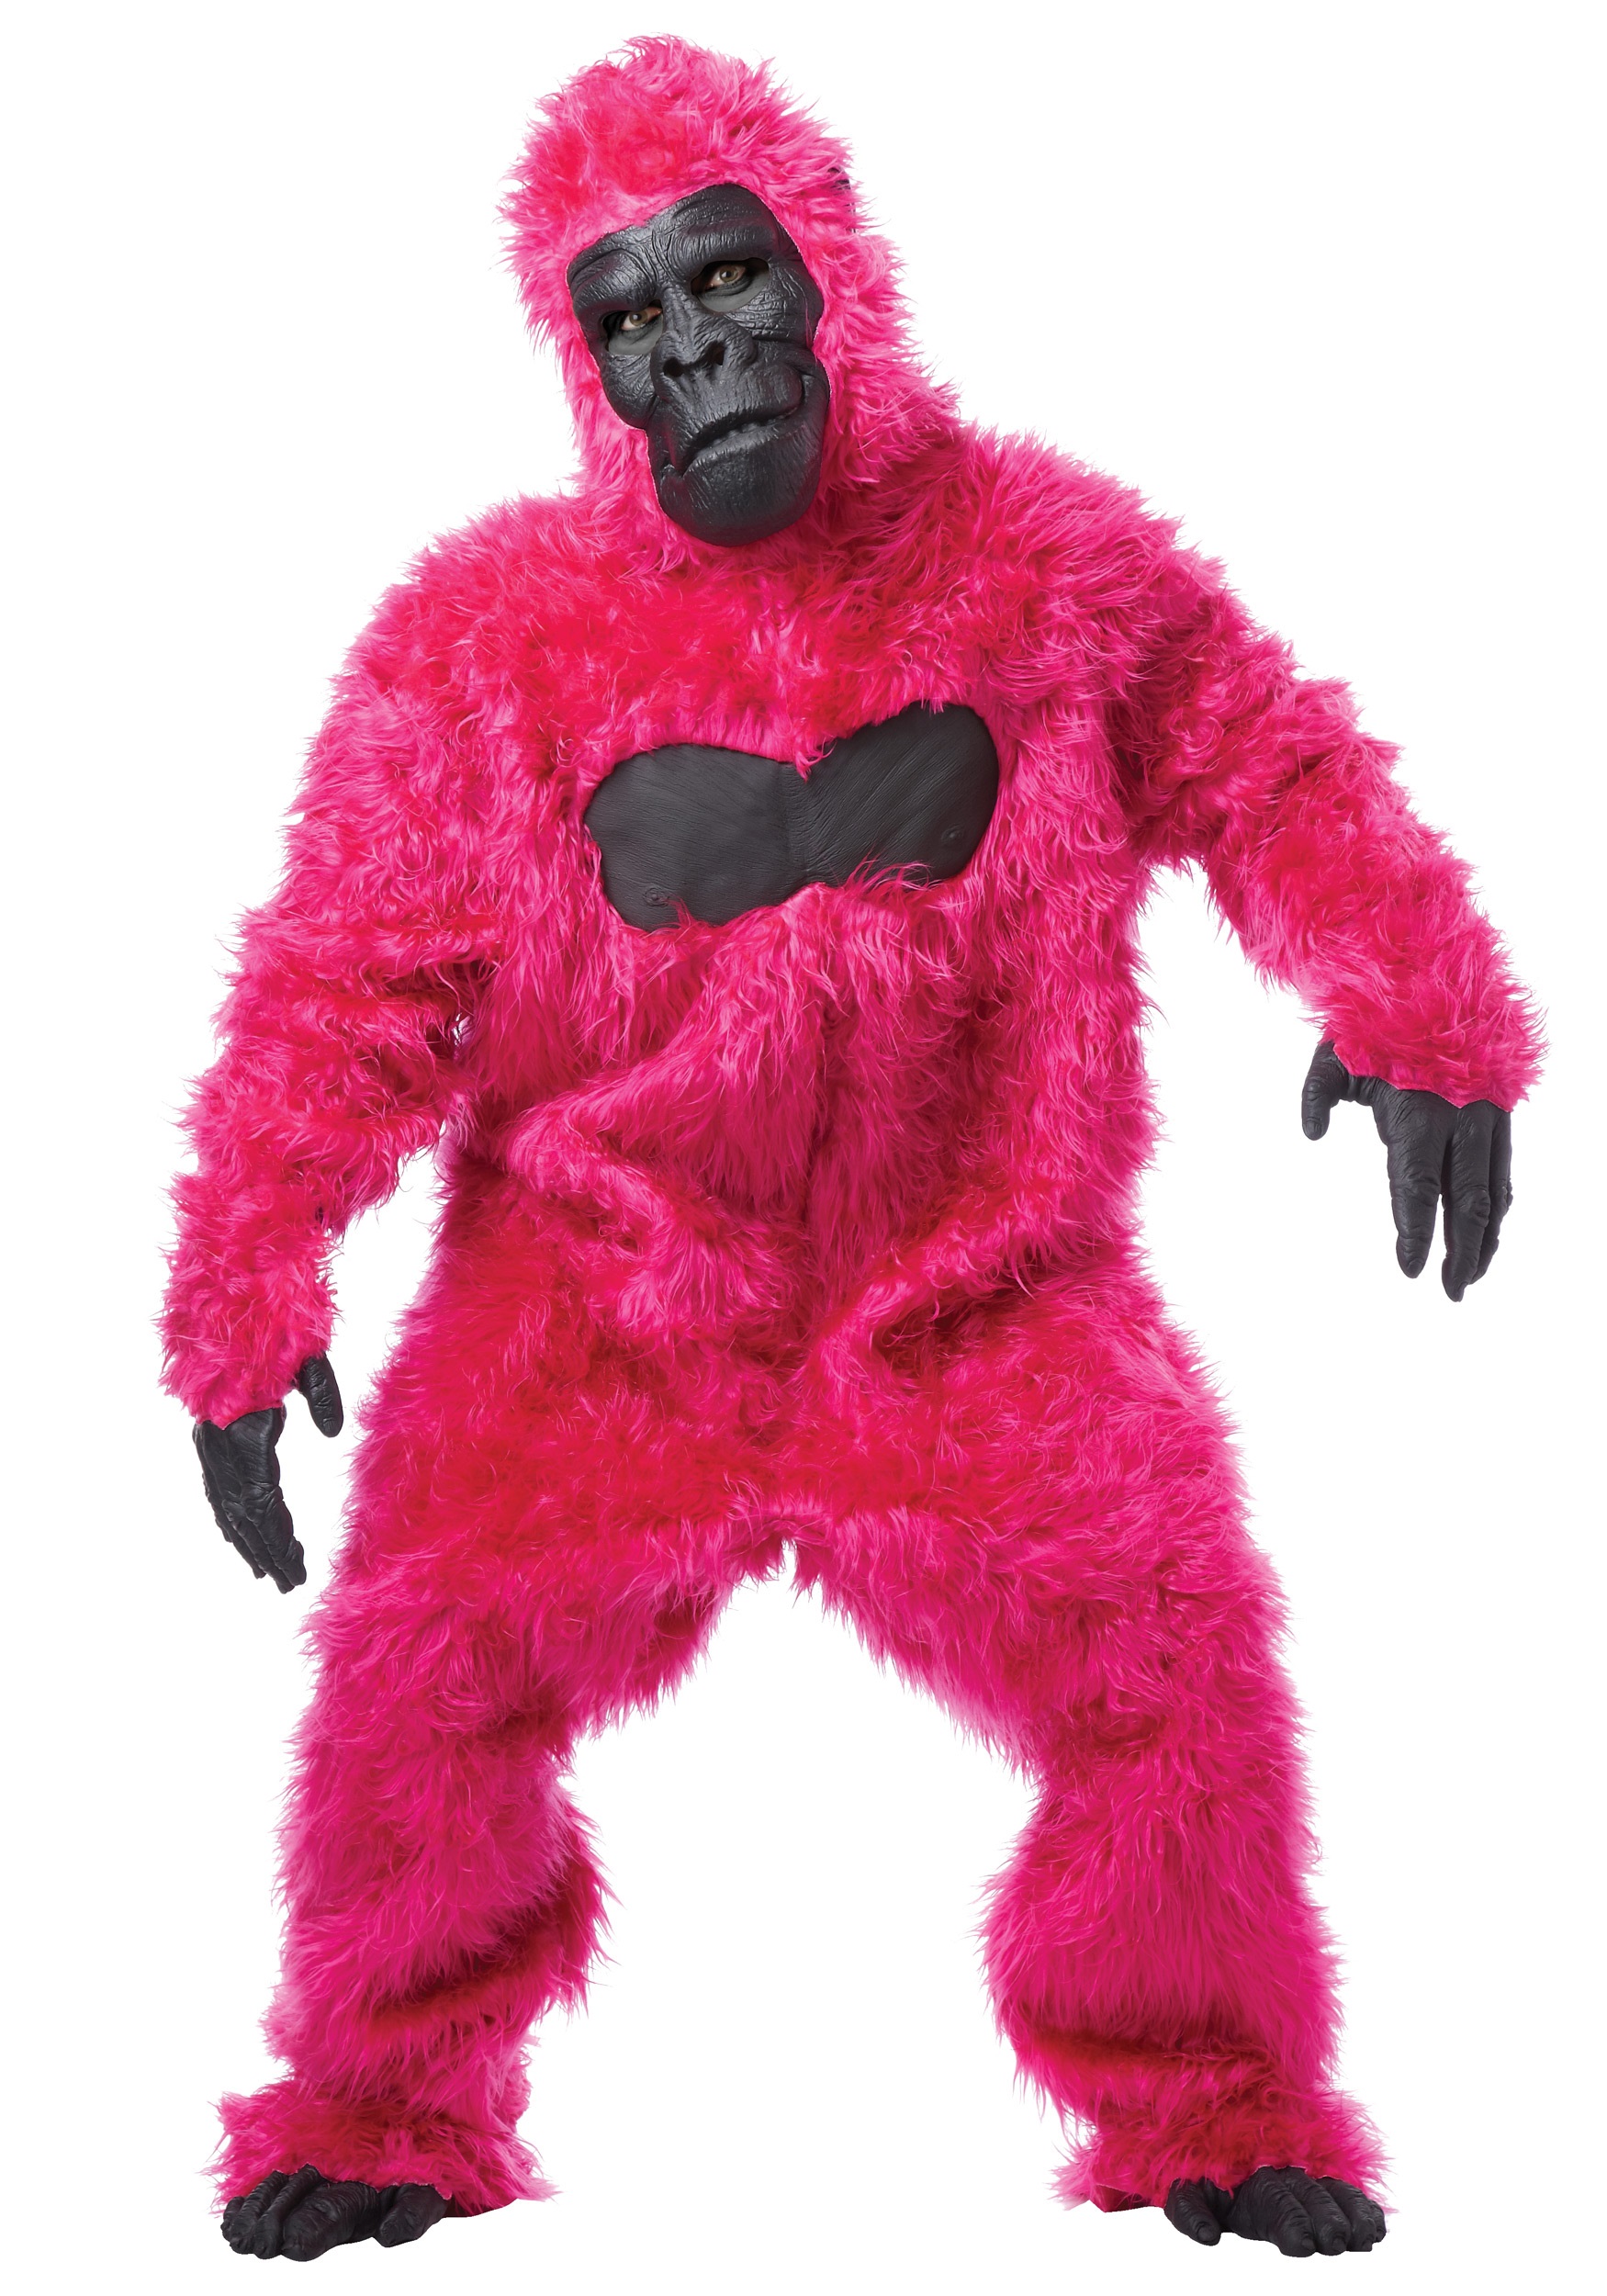  Monkey Chest Muscles Shirt Halloween Costume Gorilla